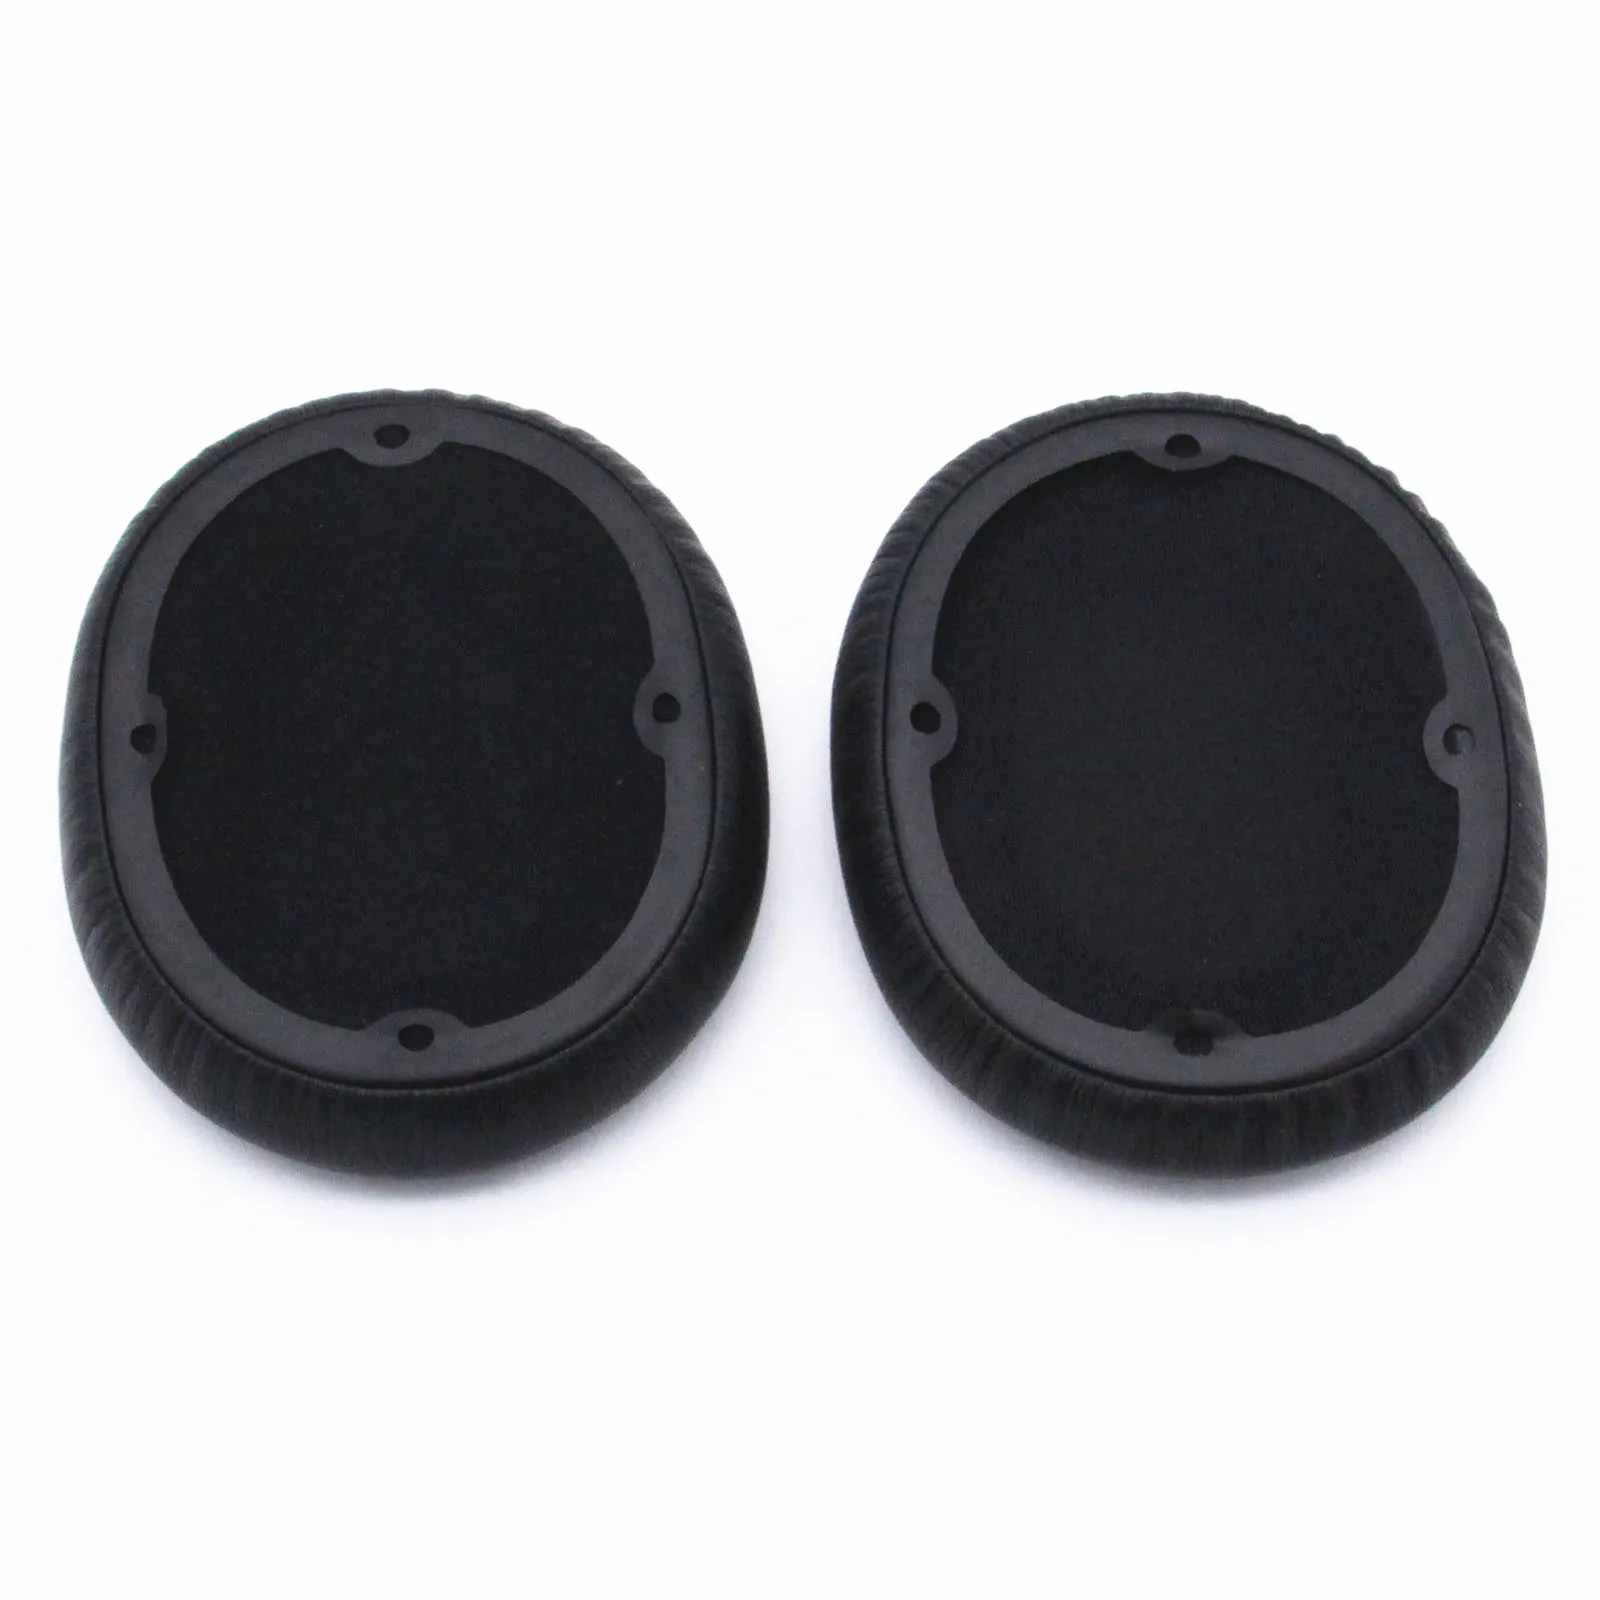 1Pair Replacement Earpads Ear Pad Cushion Foam for Edifier W830BT W860NB W830 BT W860 NB Headphones Cups Cover usb headset